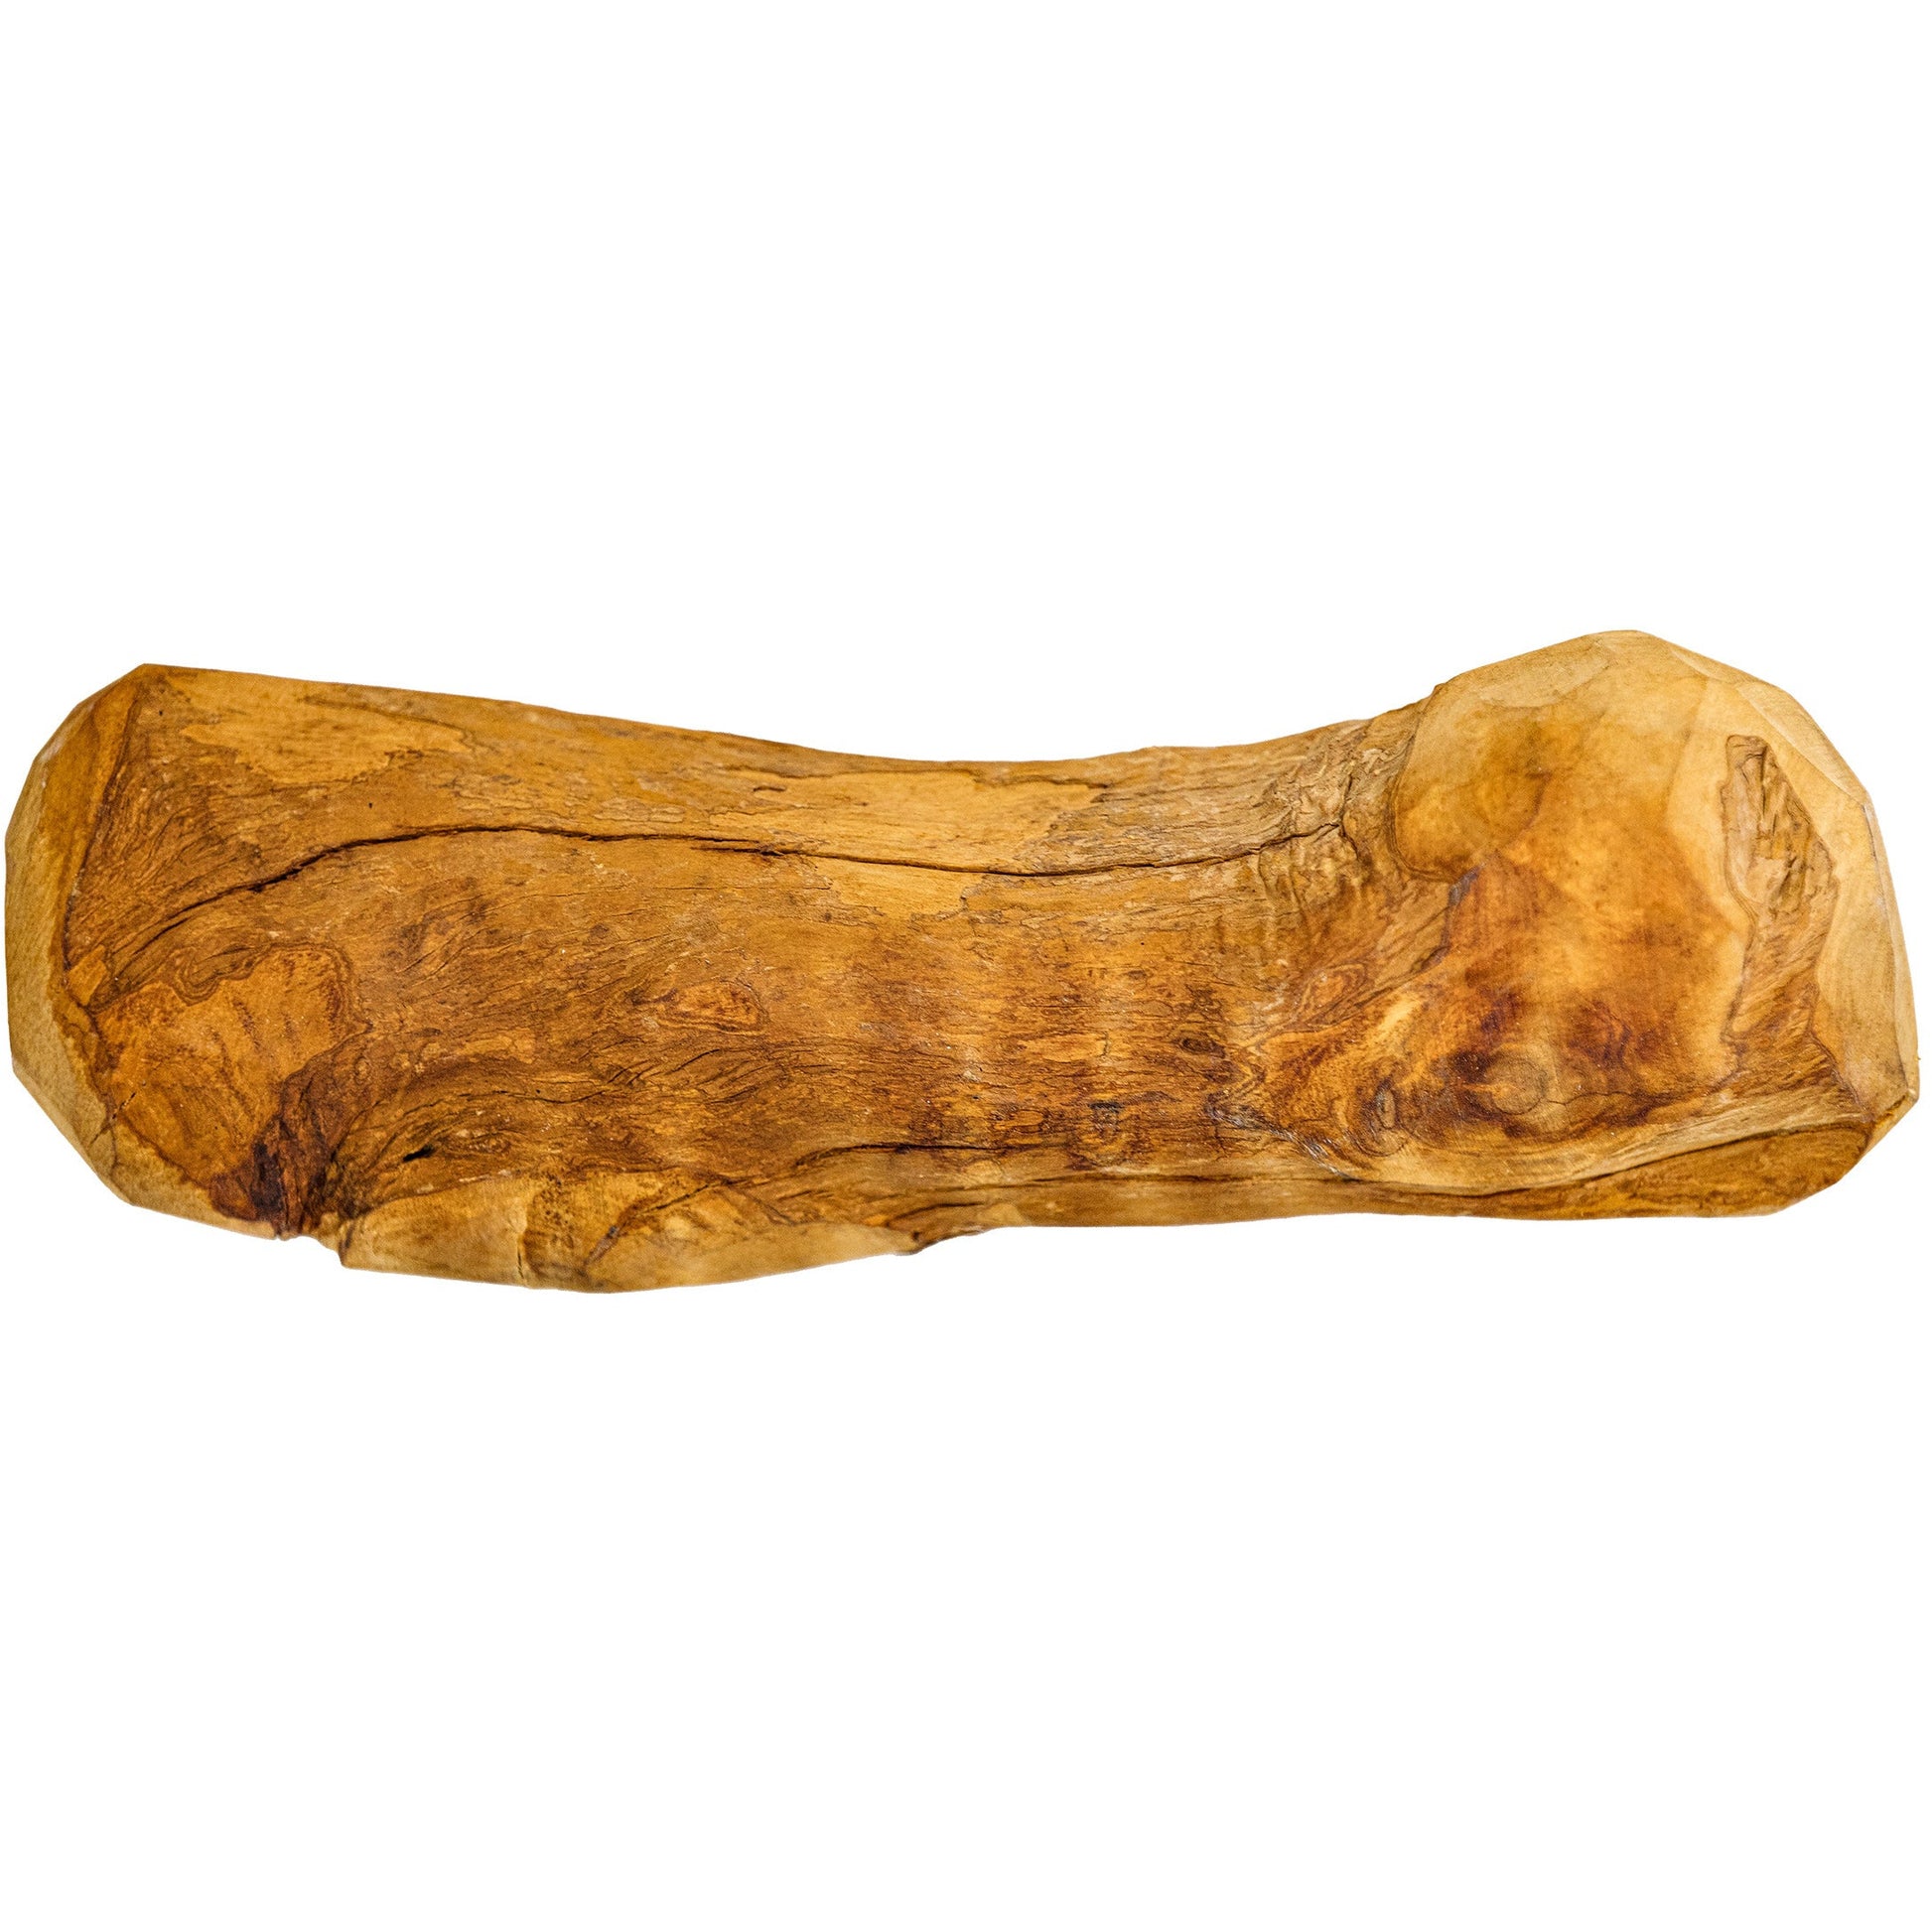 Dentler Java Wood Dog Chew Smoked Maple Ham  Chew Products  | PetMax Canada